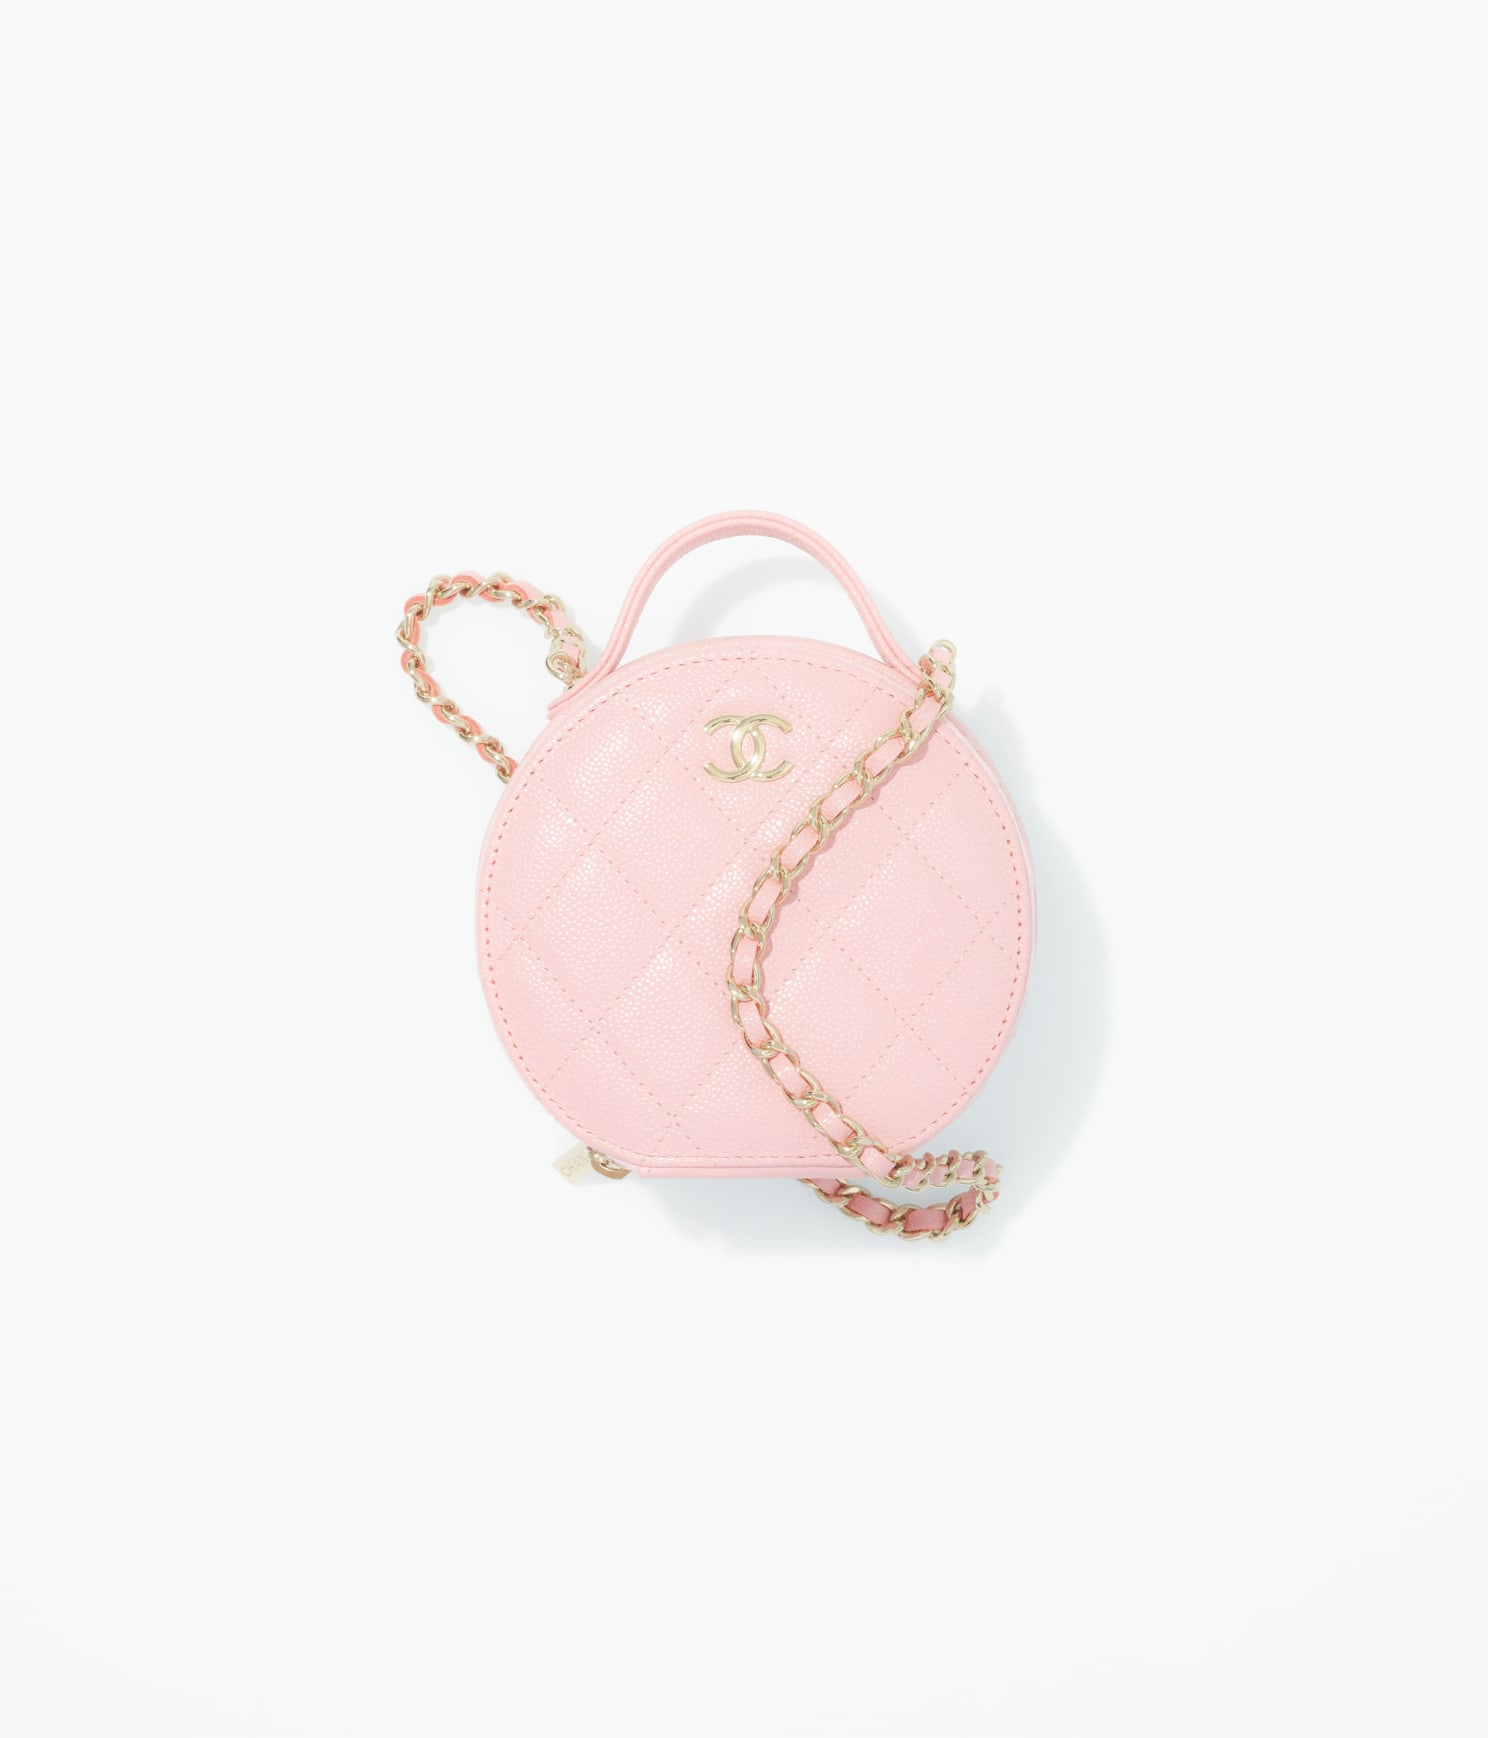 Handbags — Cruise 2021/22 Collection — Fashion, CHANEL